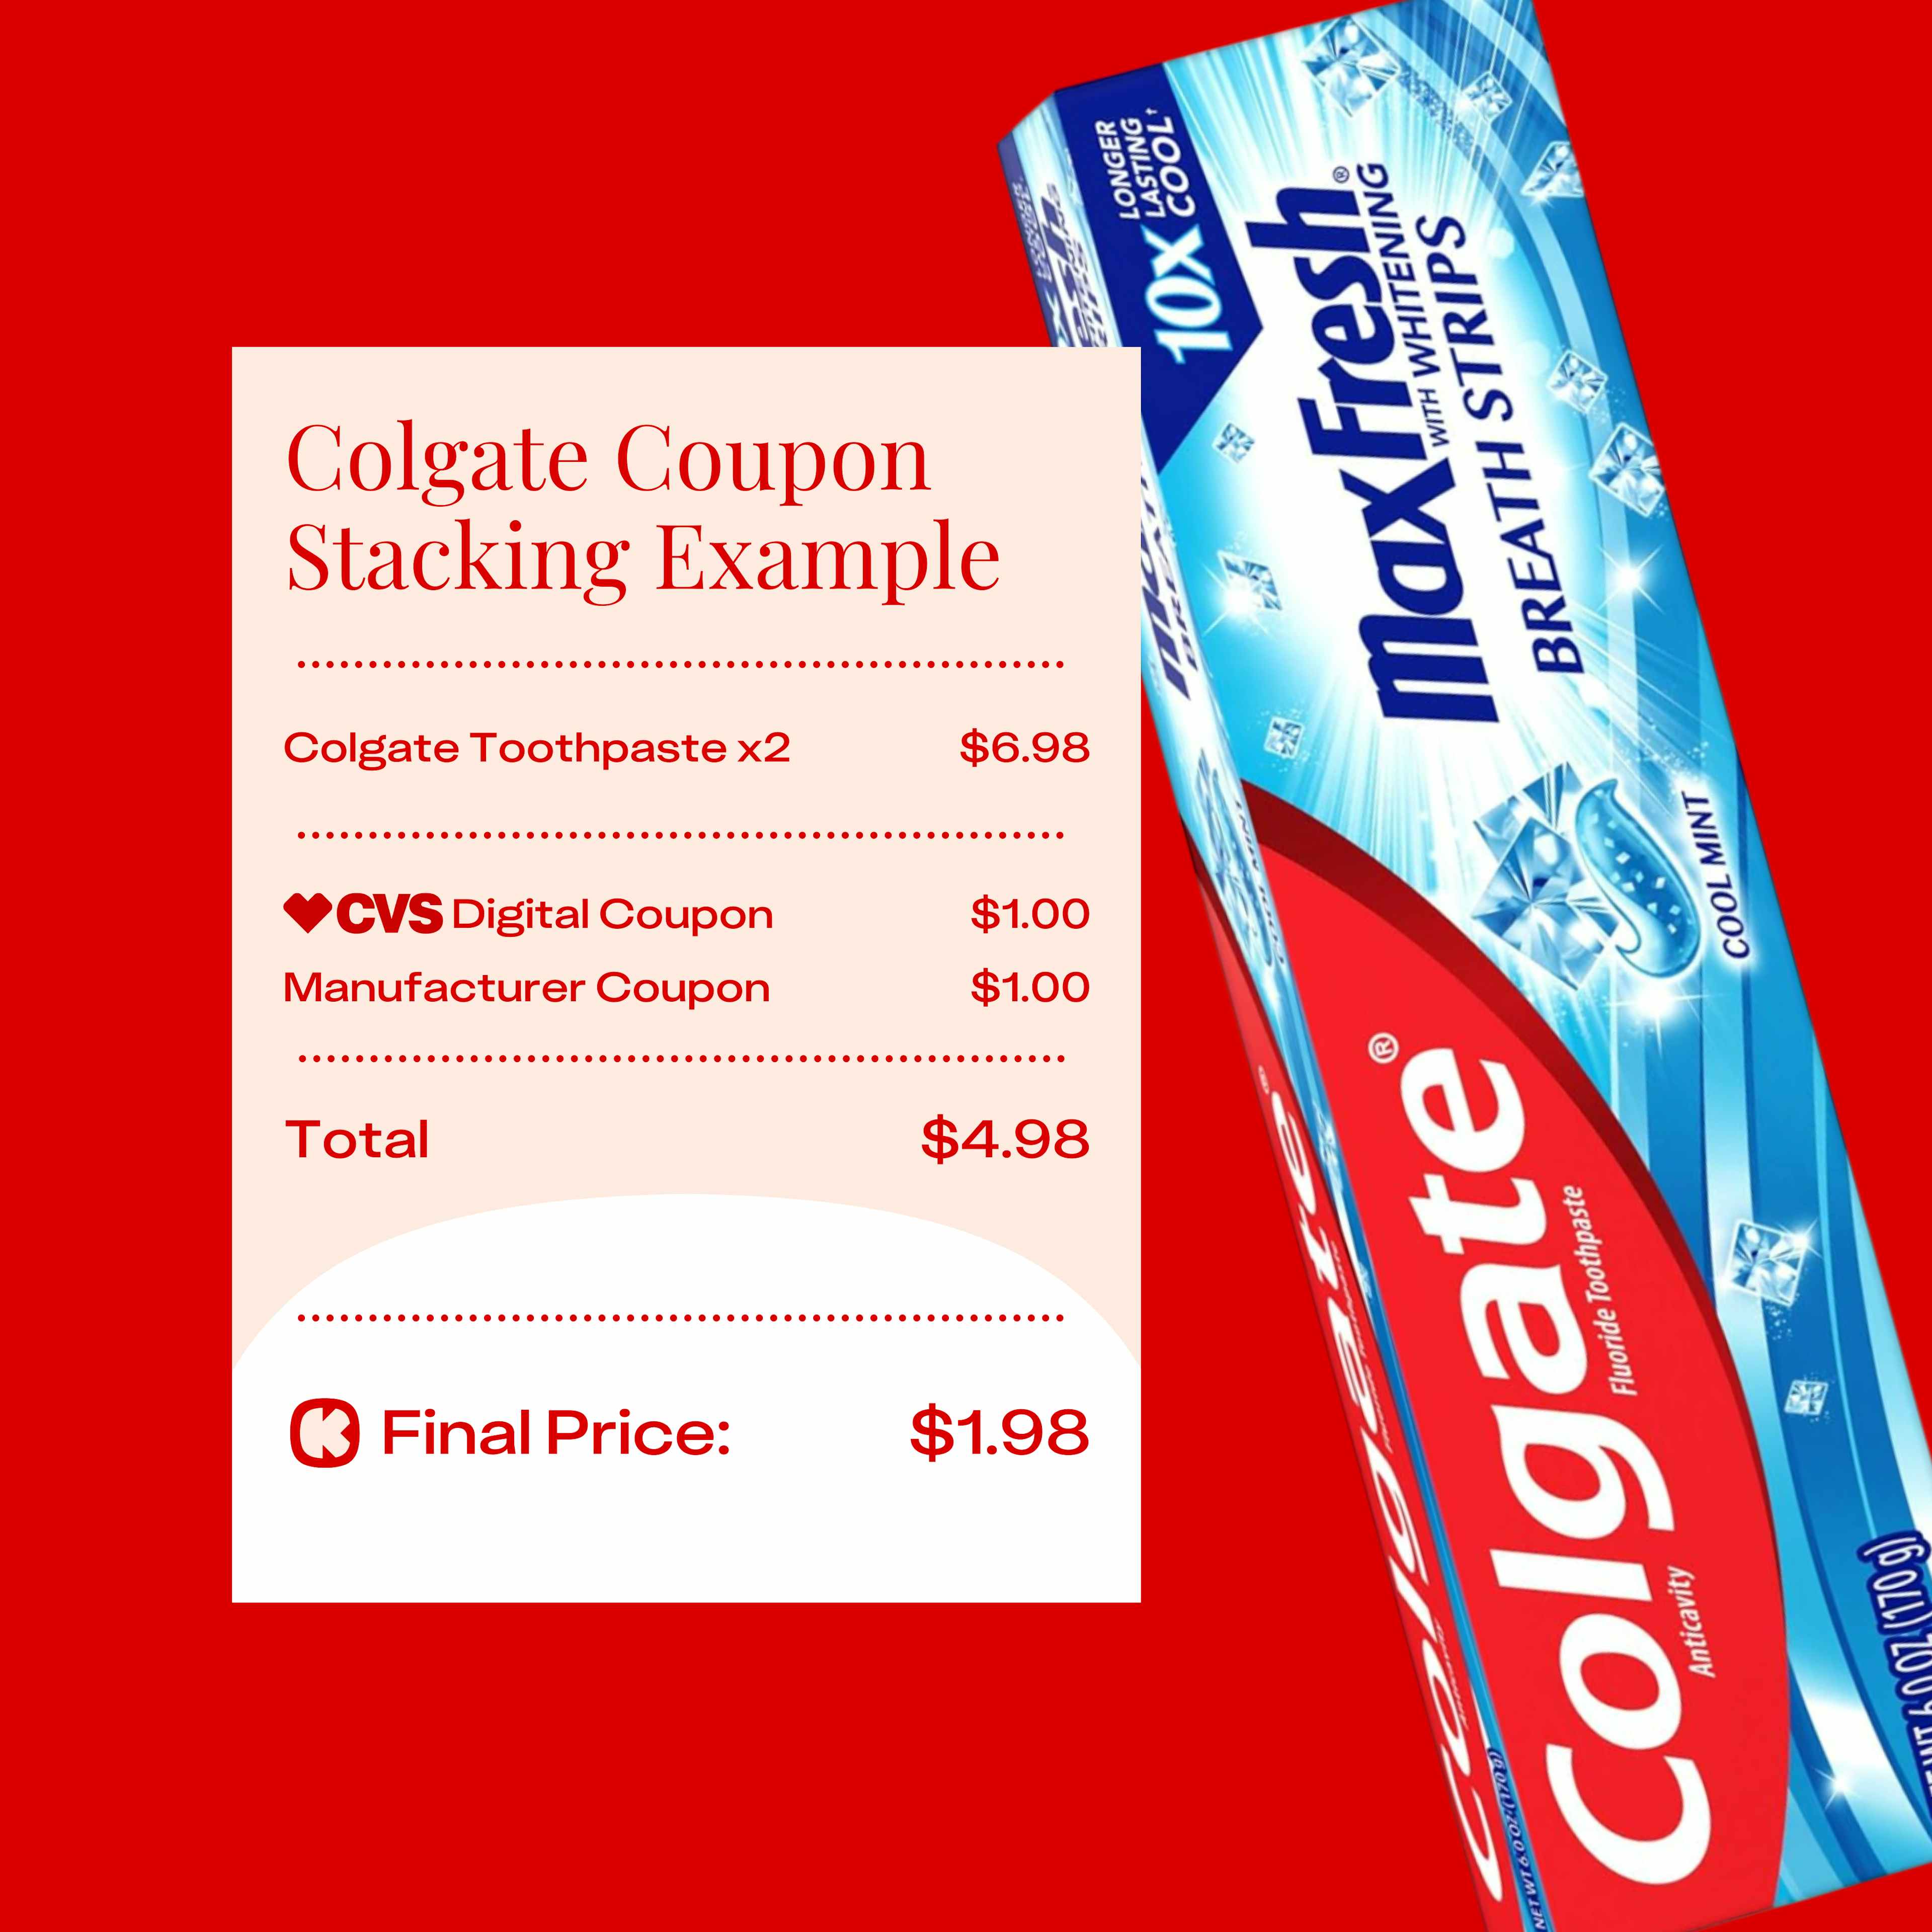 cvs-coupon-stacking-colgate